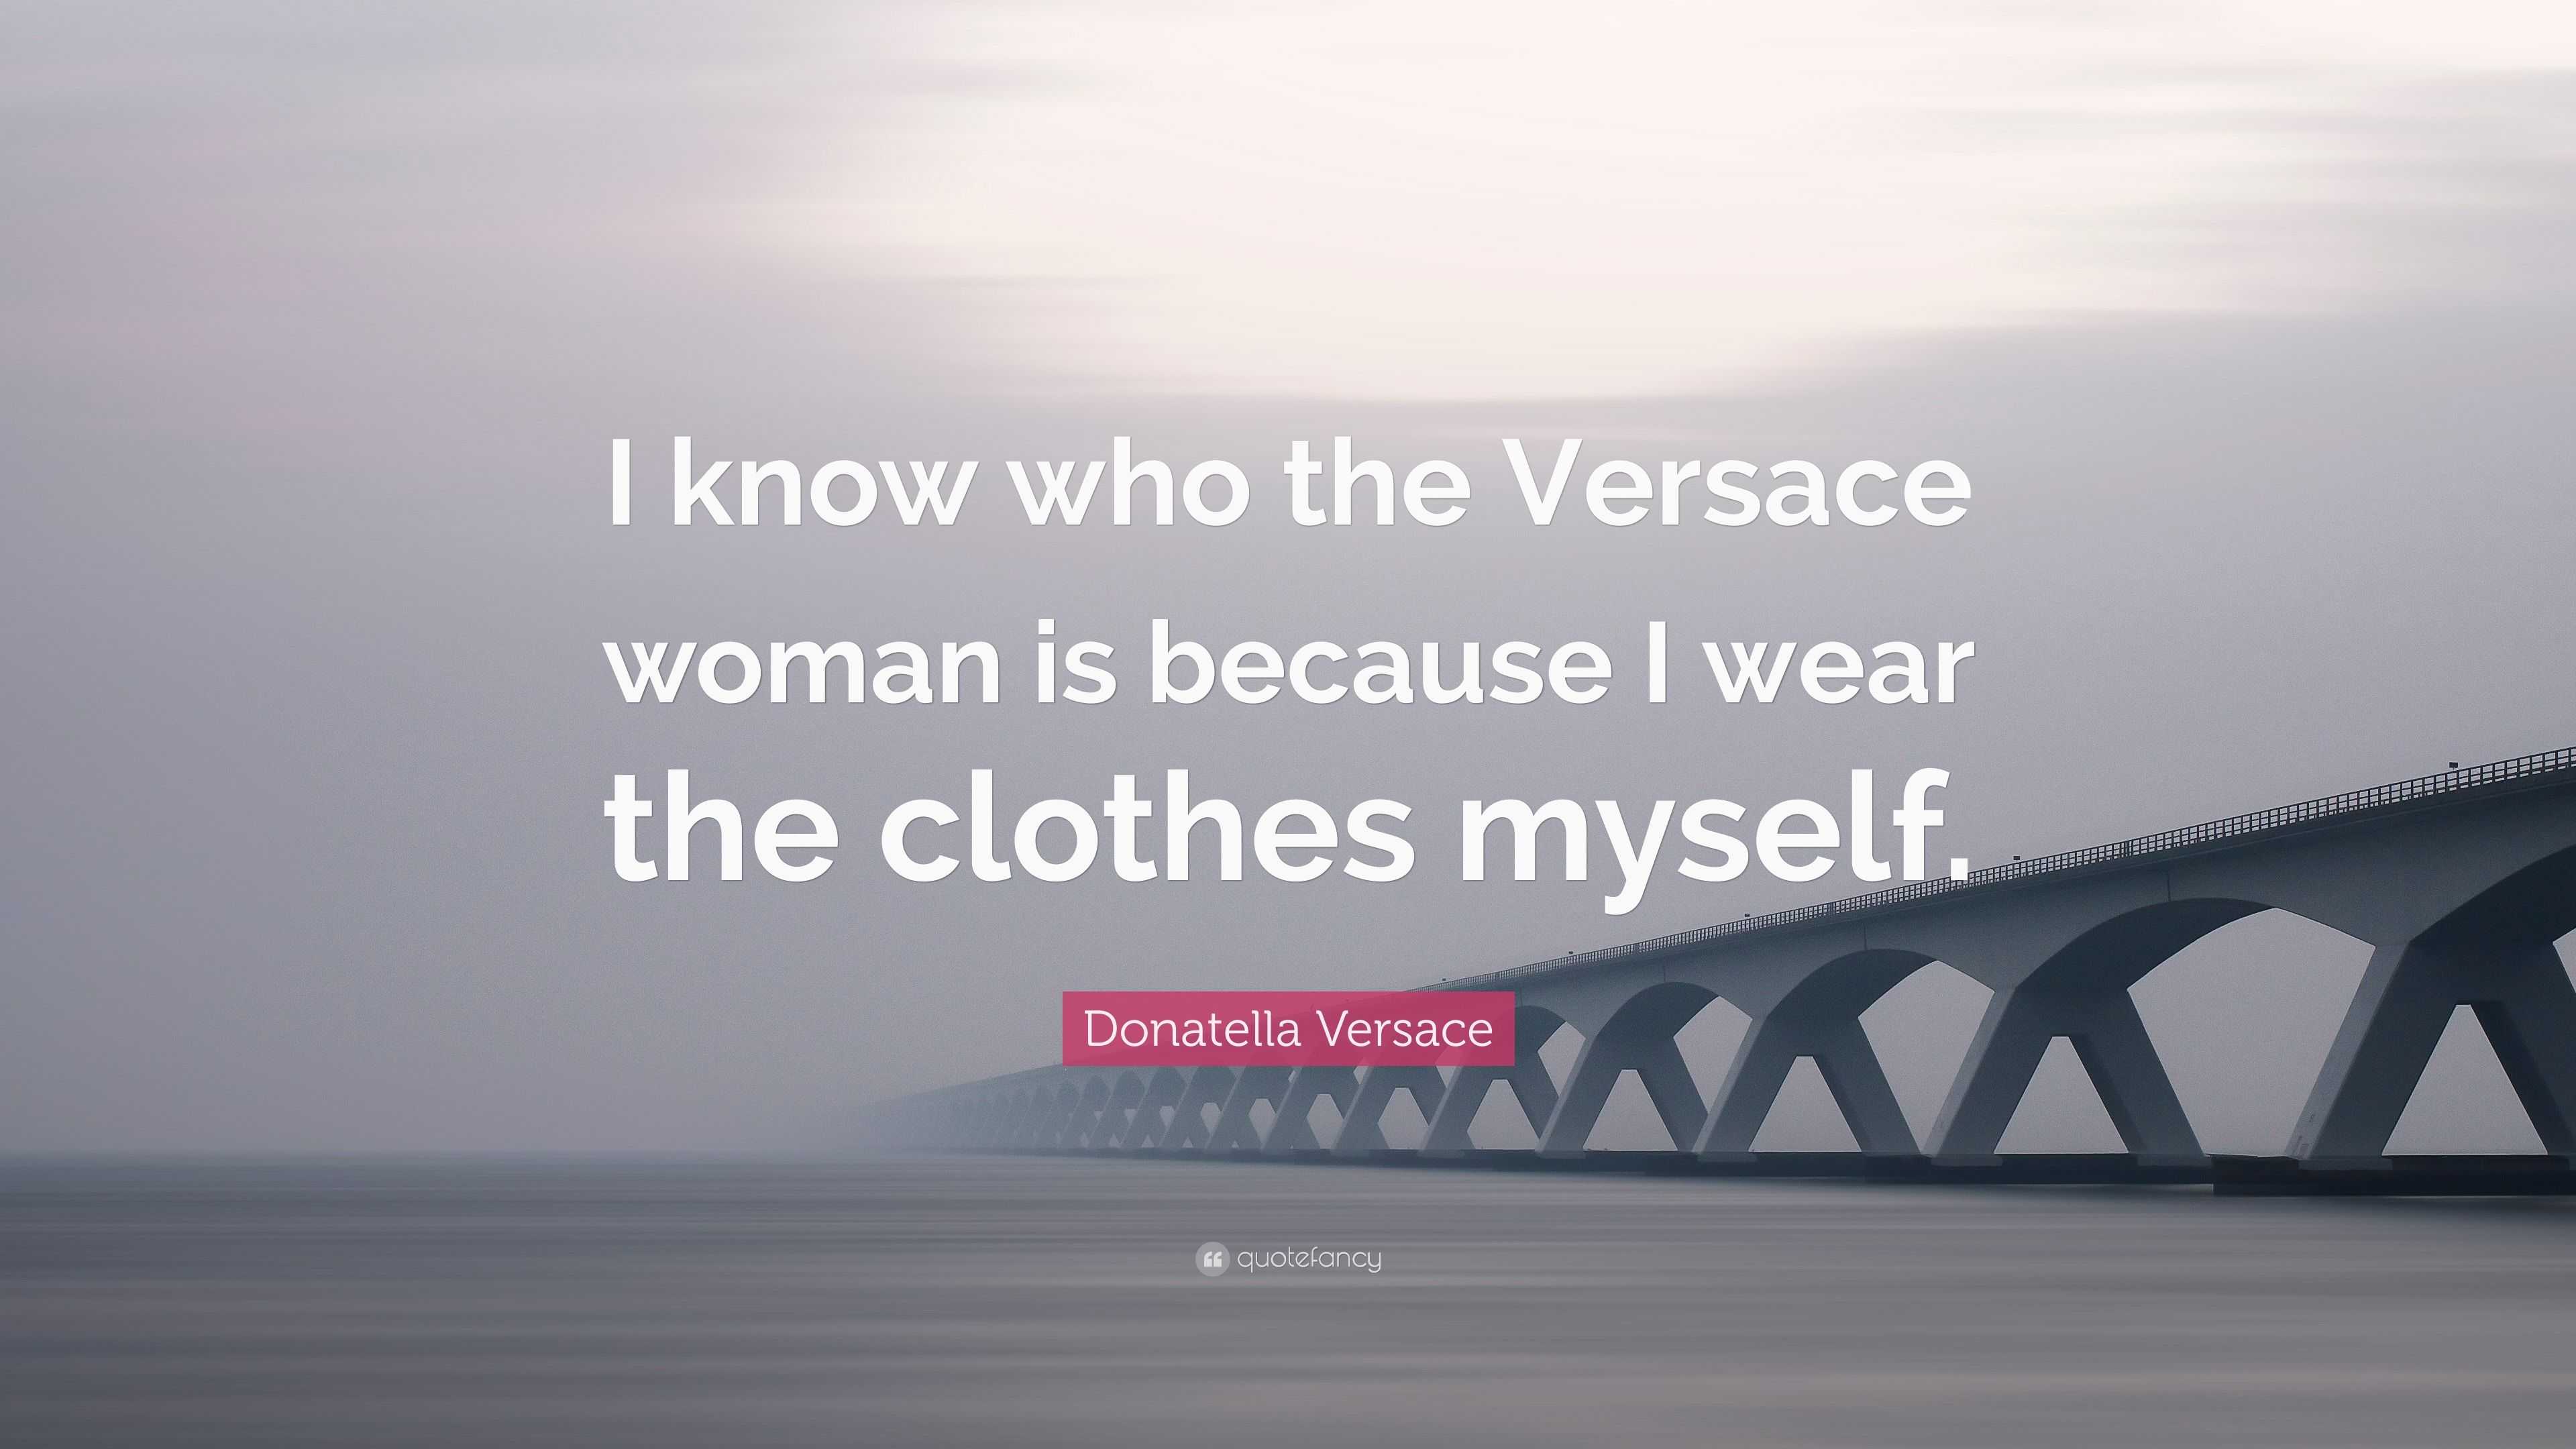 Versace Woman